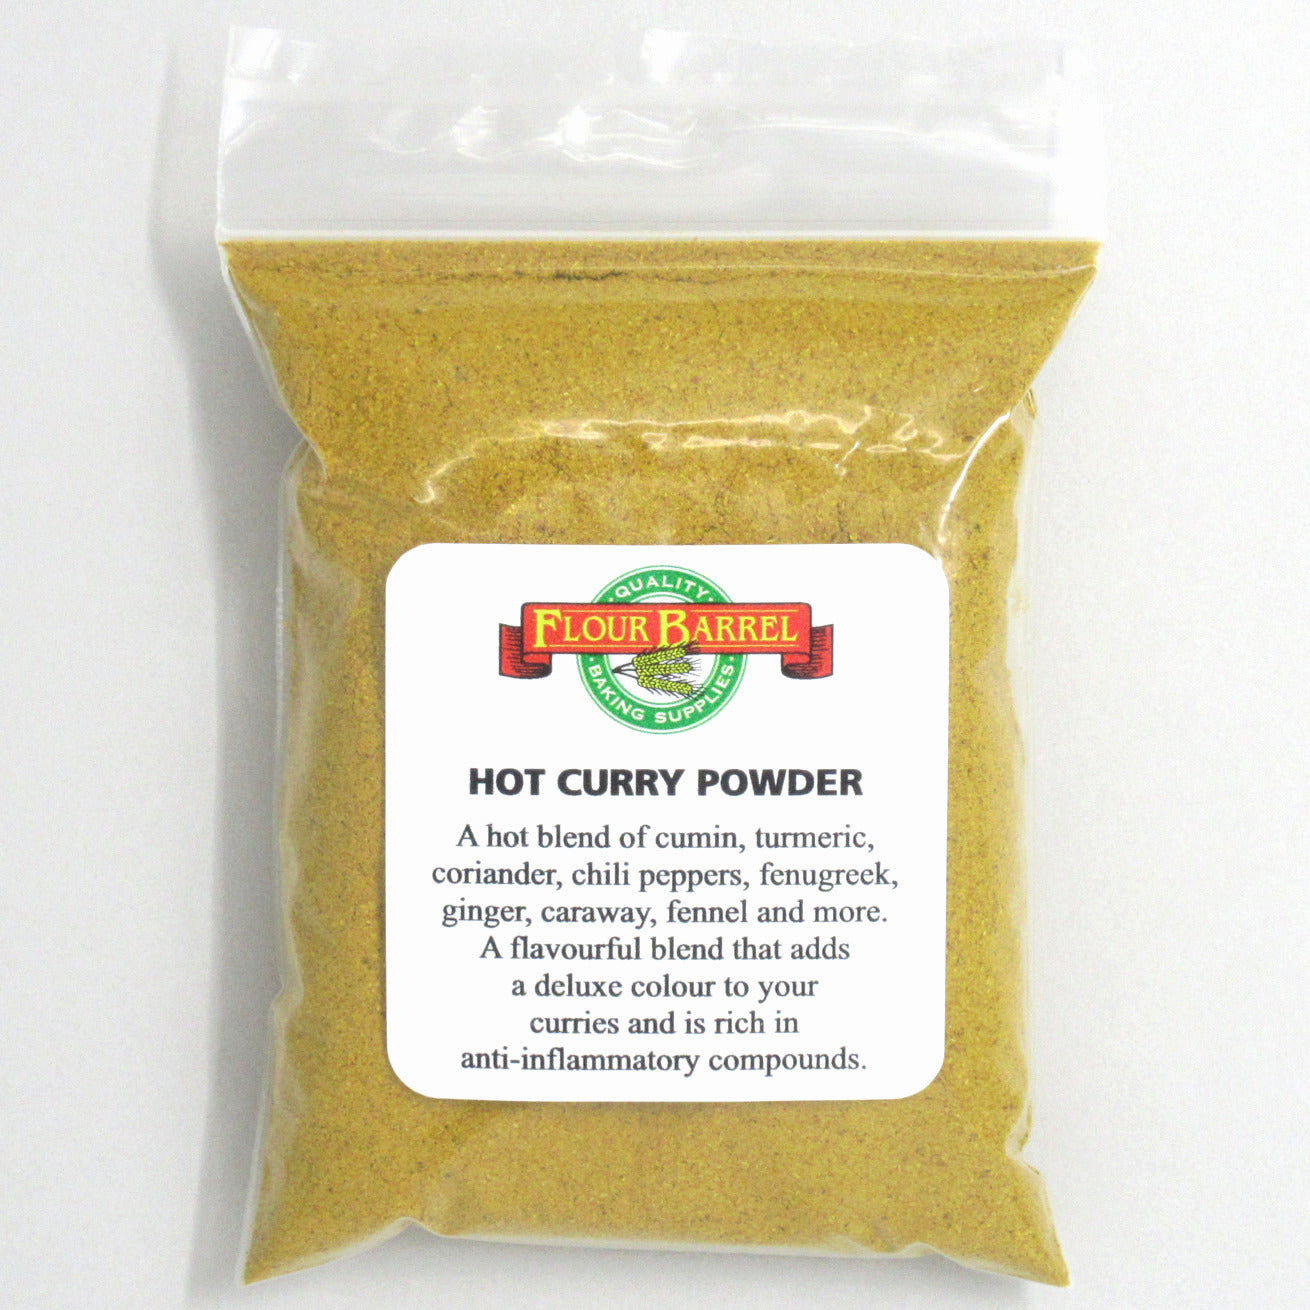 Flour Barrel product image - Hot Curry Powder